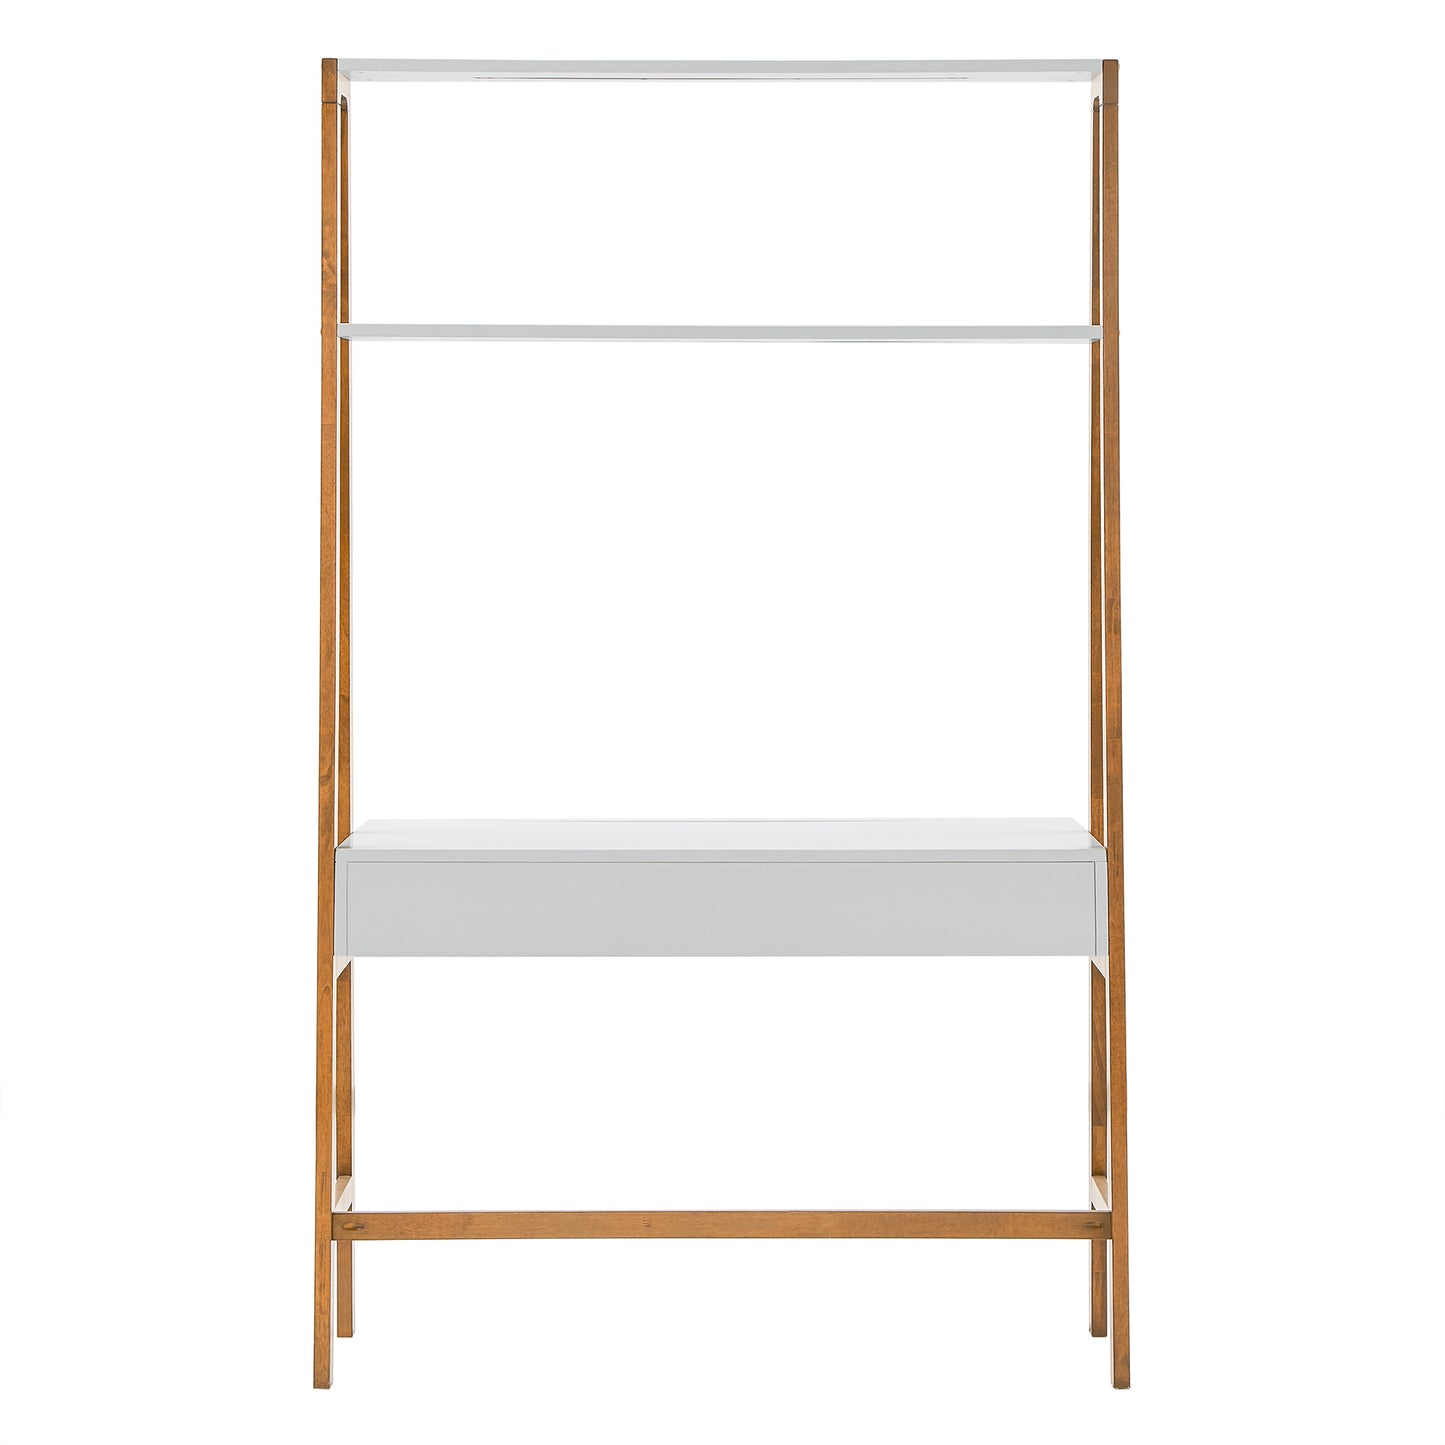 46" Wide Leaning/Ladder Desk - White